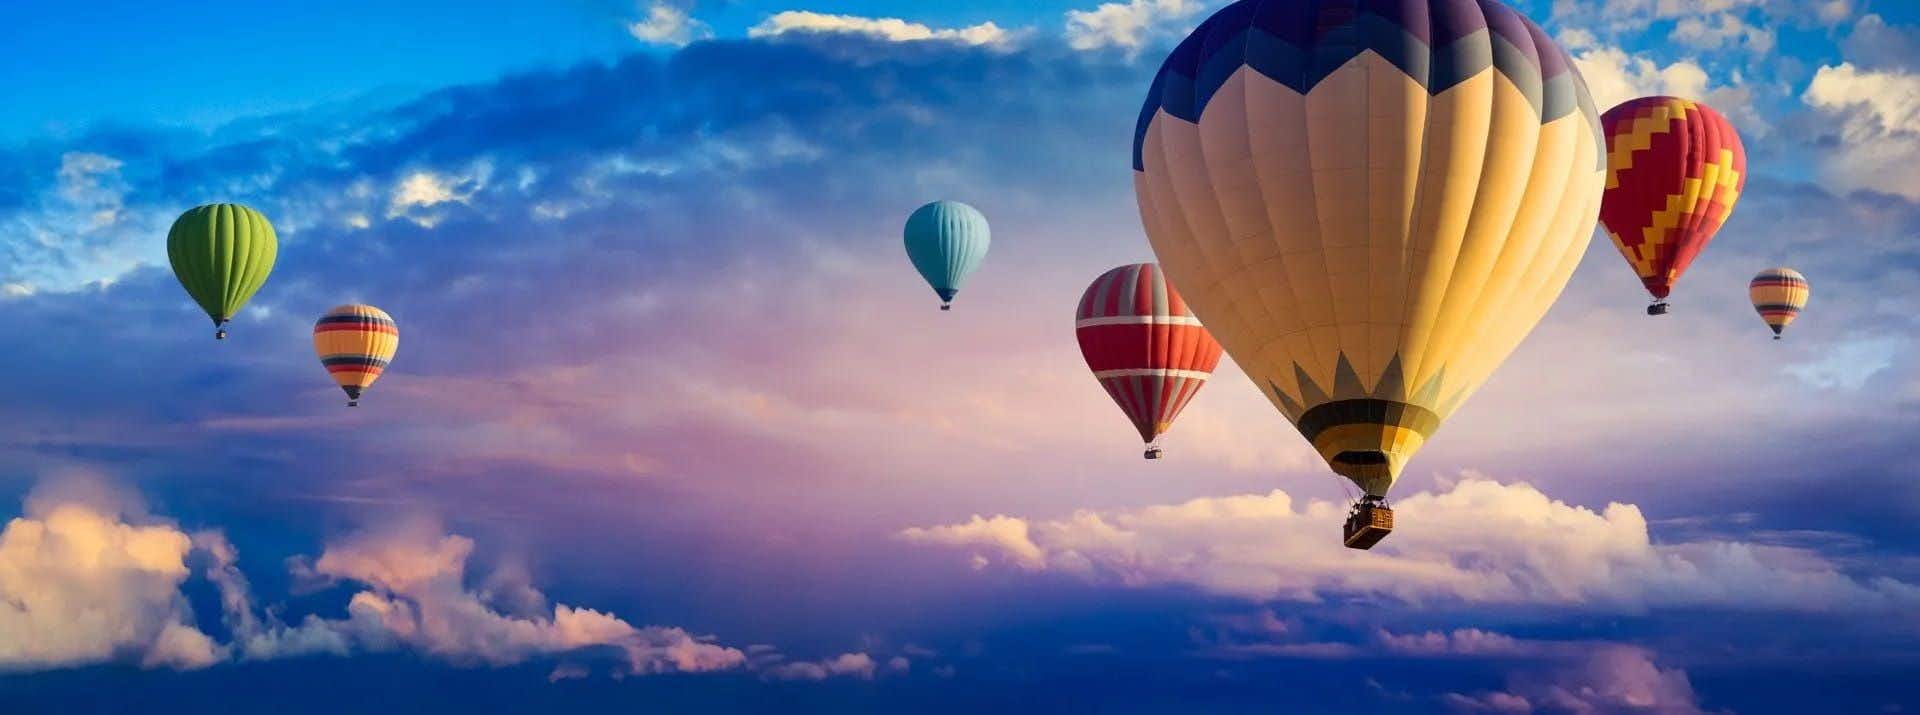 hot-air-balloon-ride-at-sunrise-background-1899938317.jpg